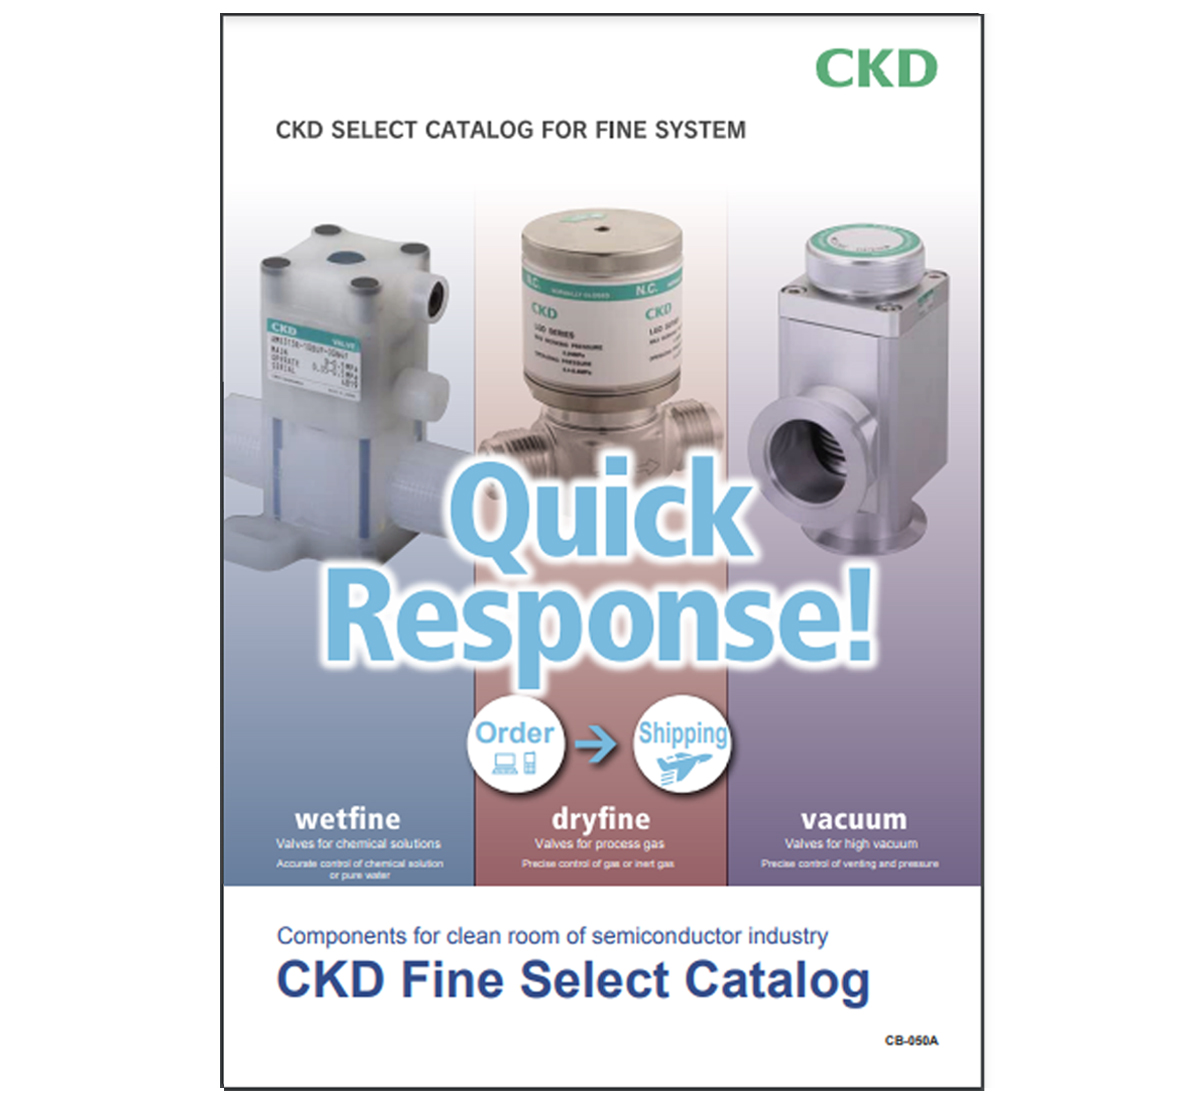 Easy model selection! CKD Select Catalog